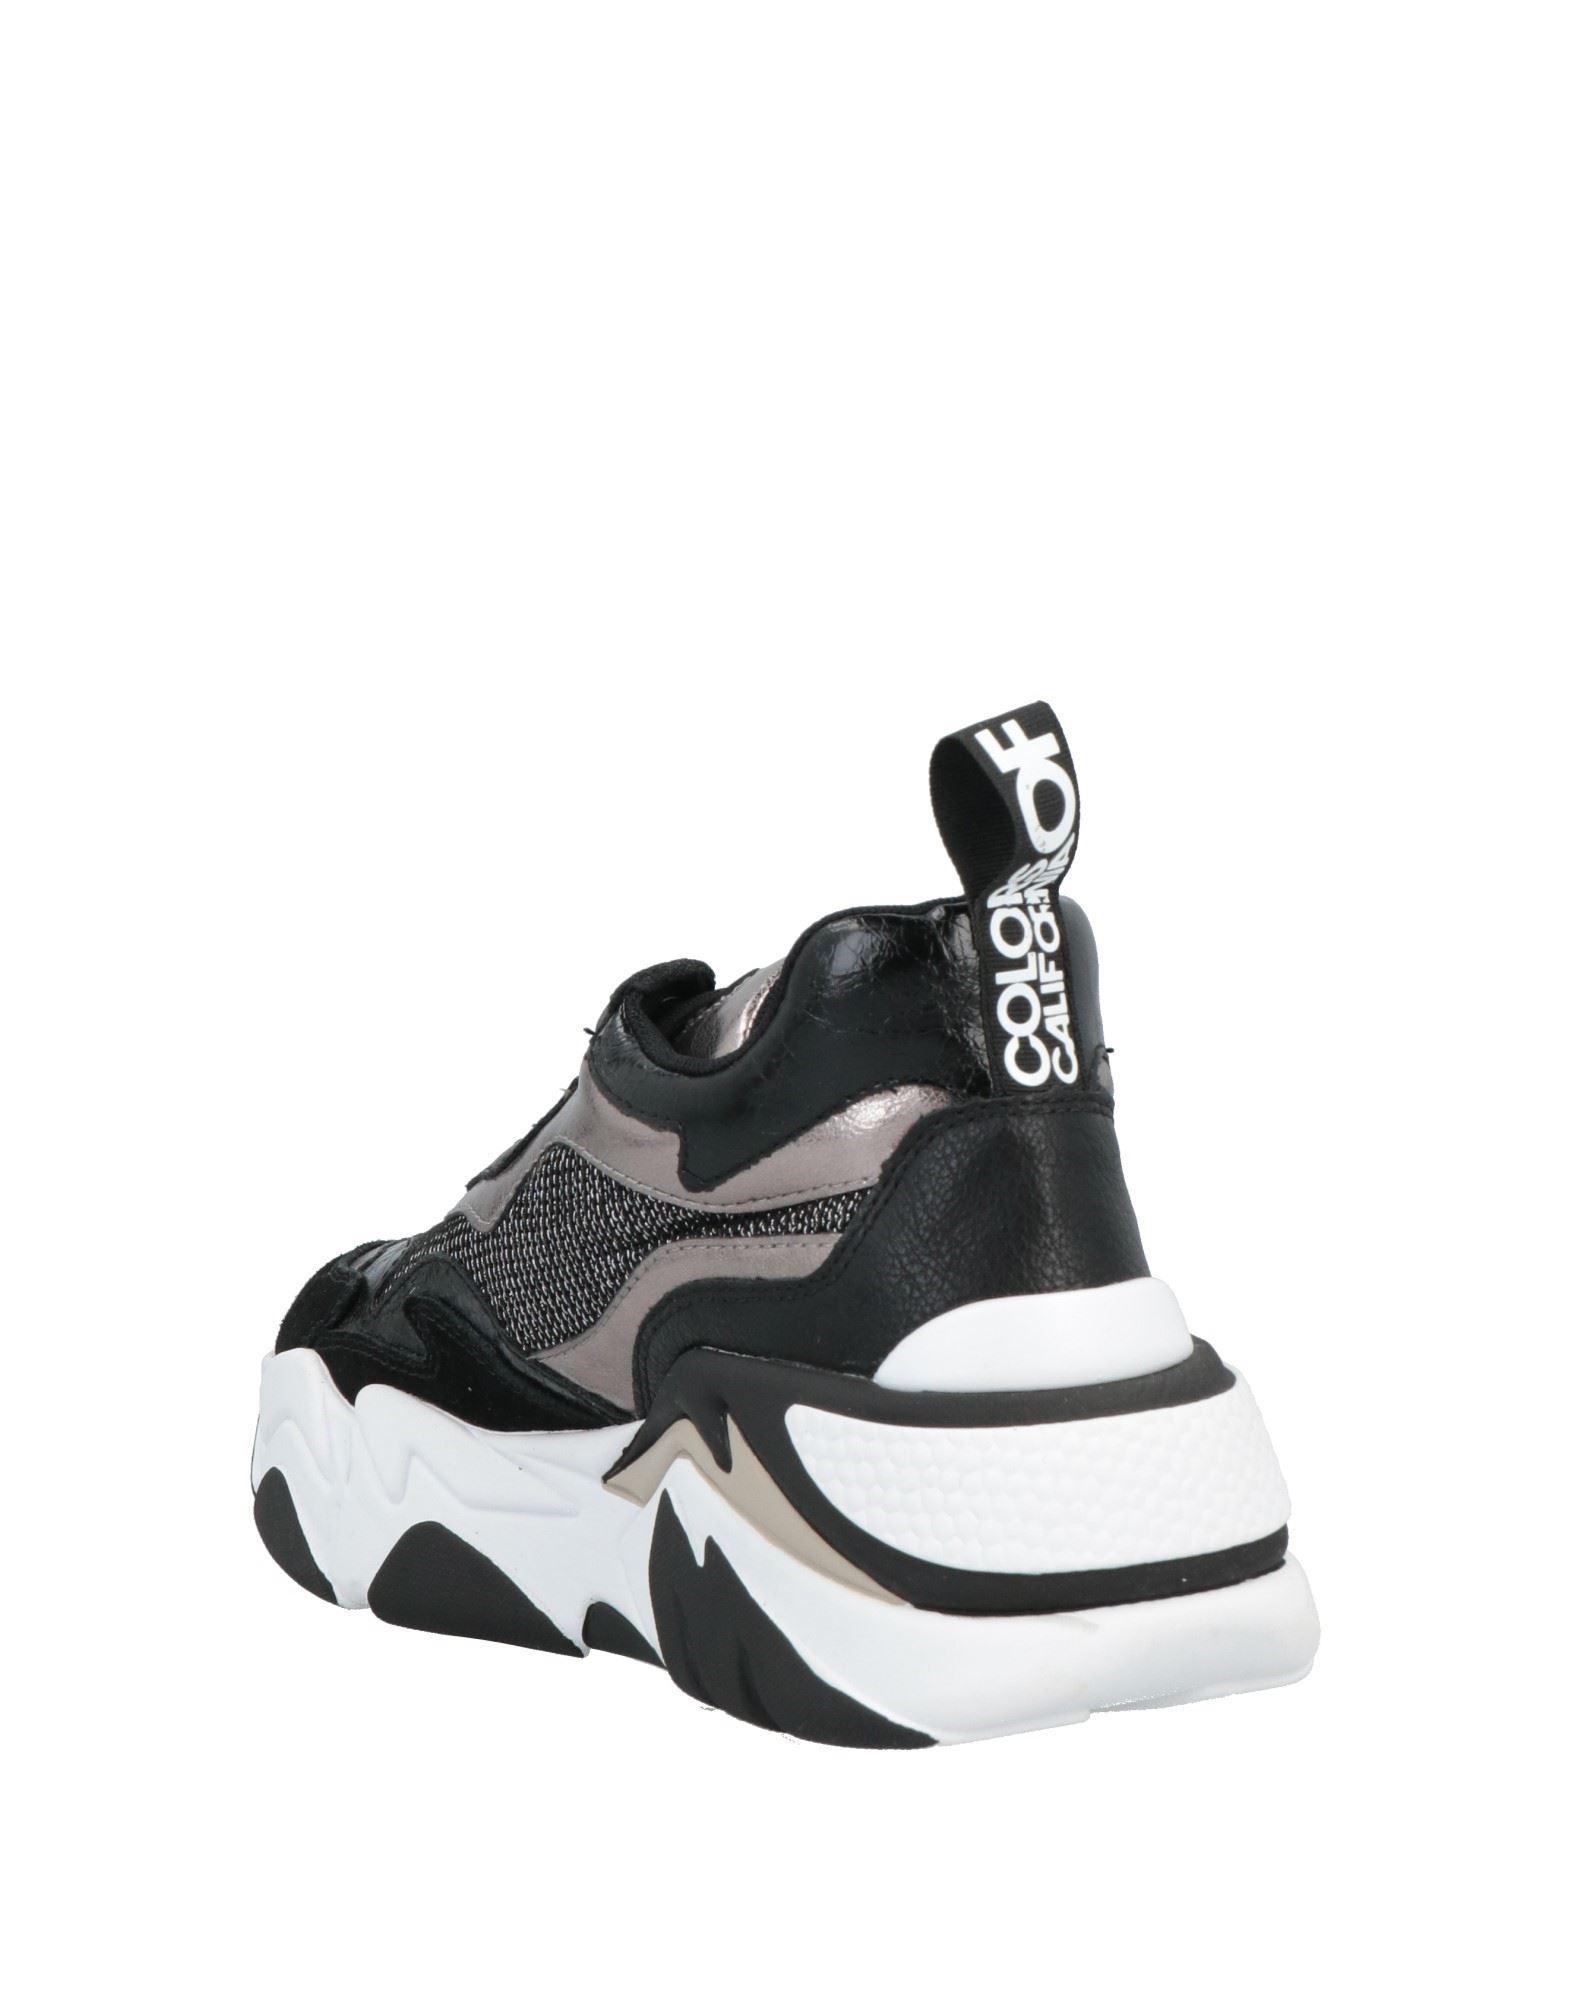 Coco California Sneakers schwarz Lack Gr 36 & 40 Budapester NEU Halbschuh 